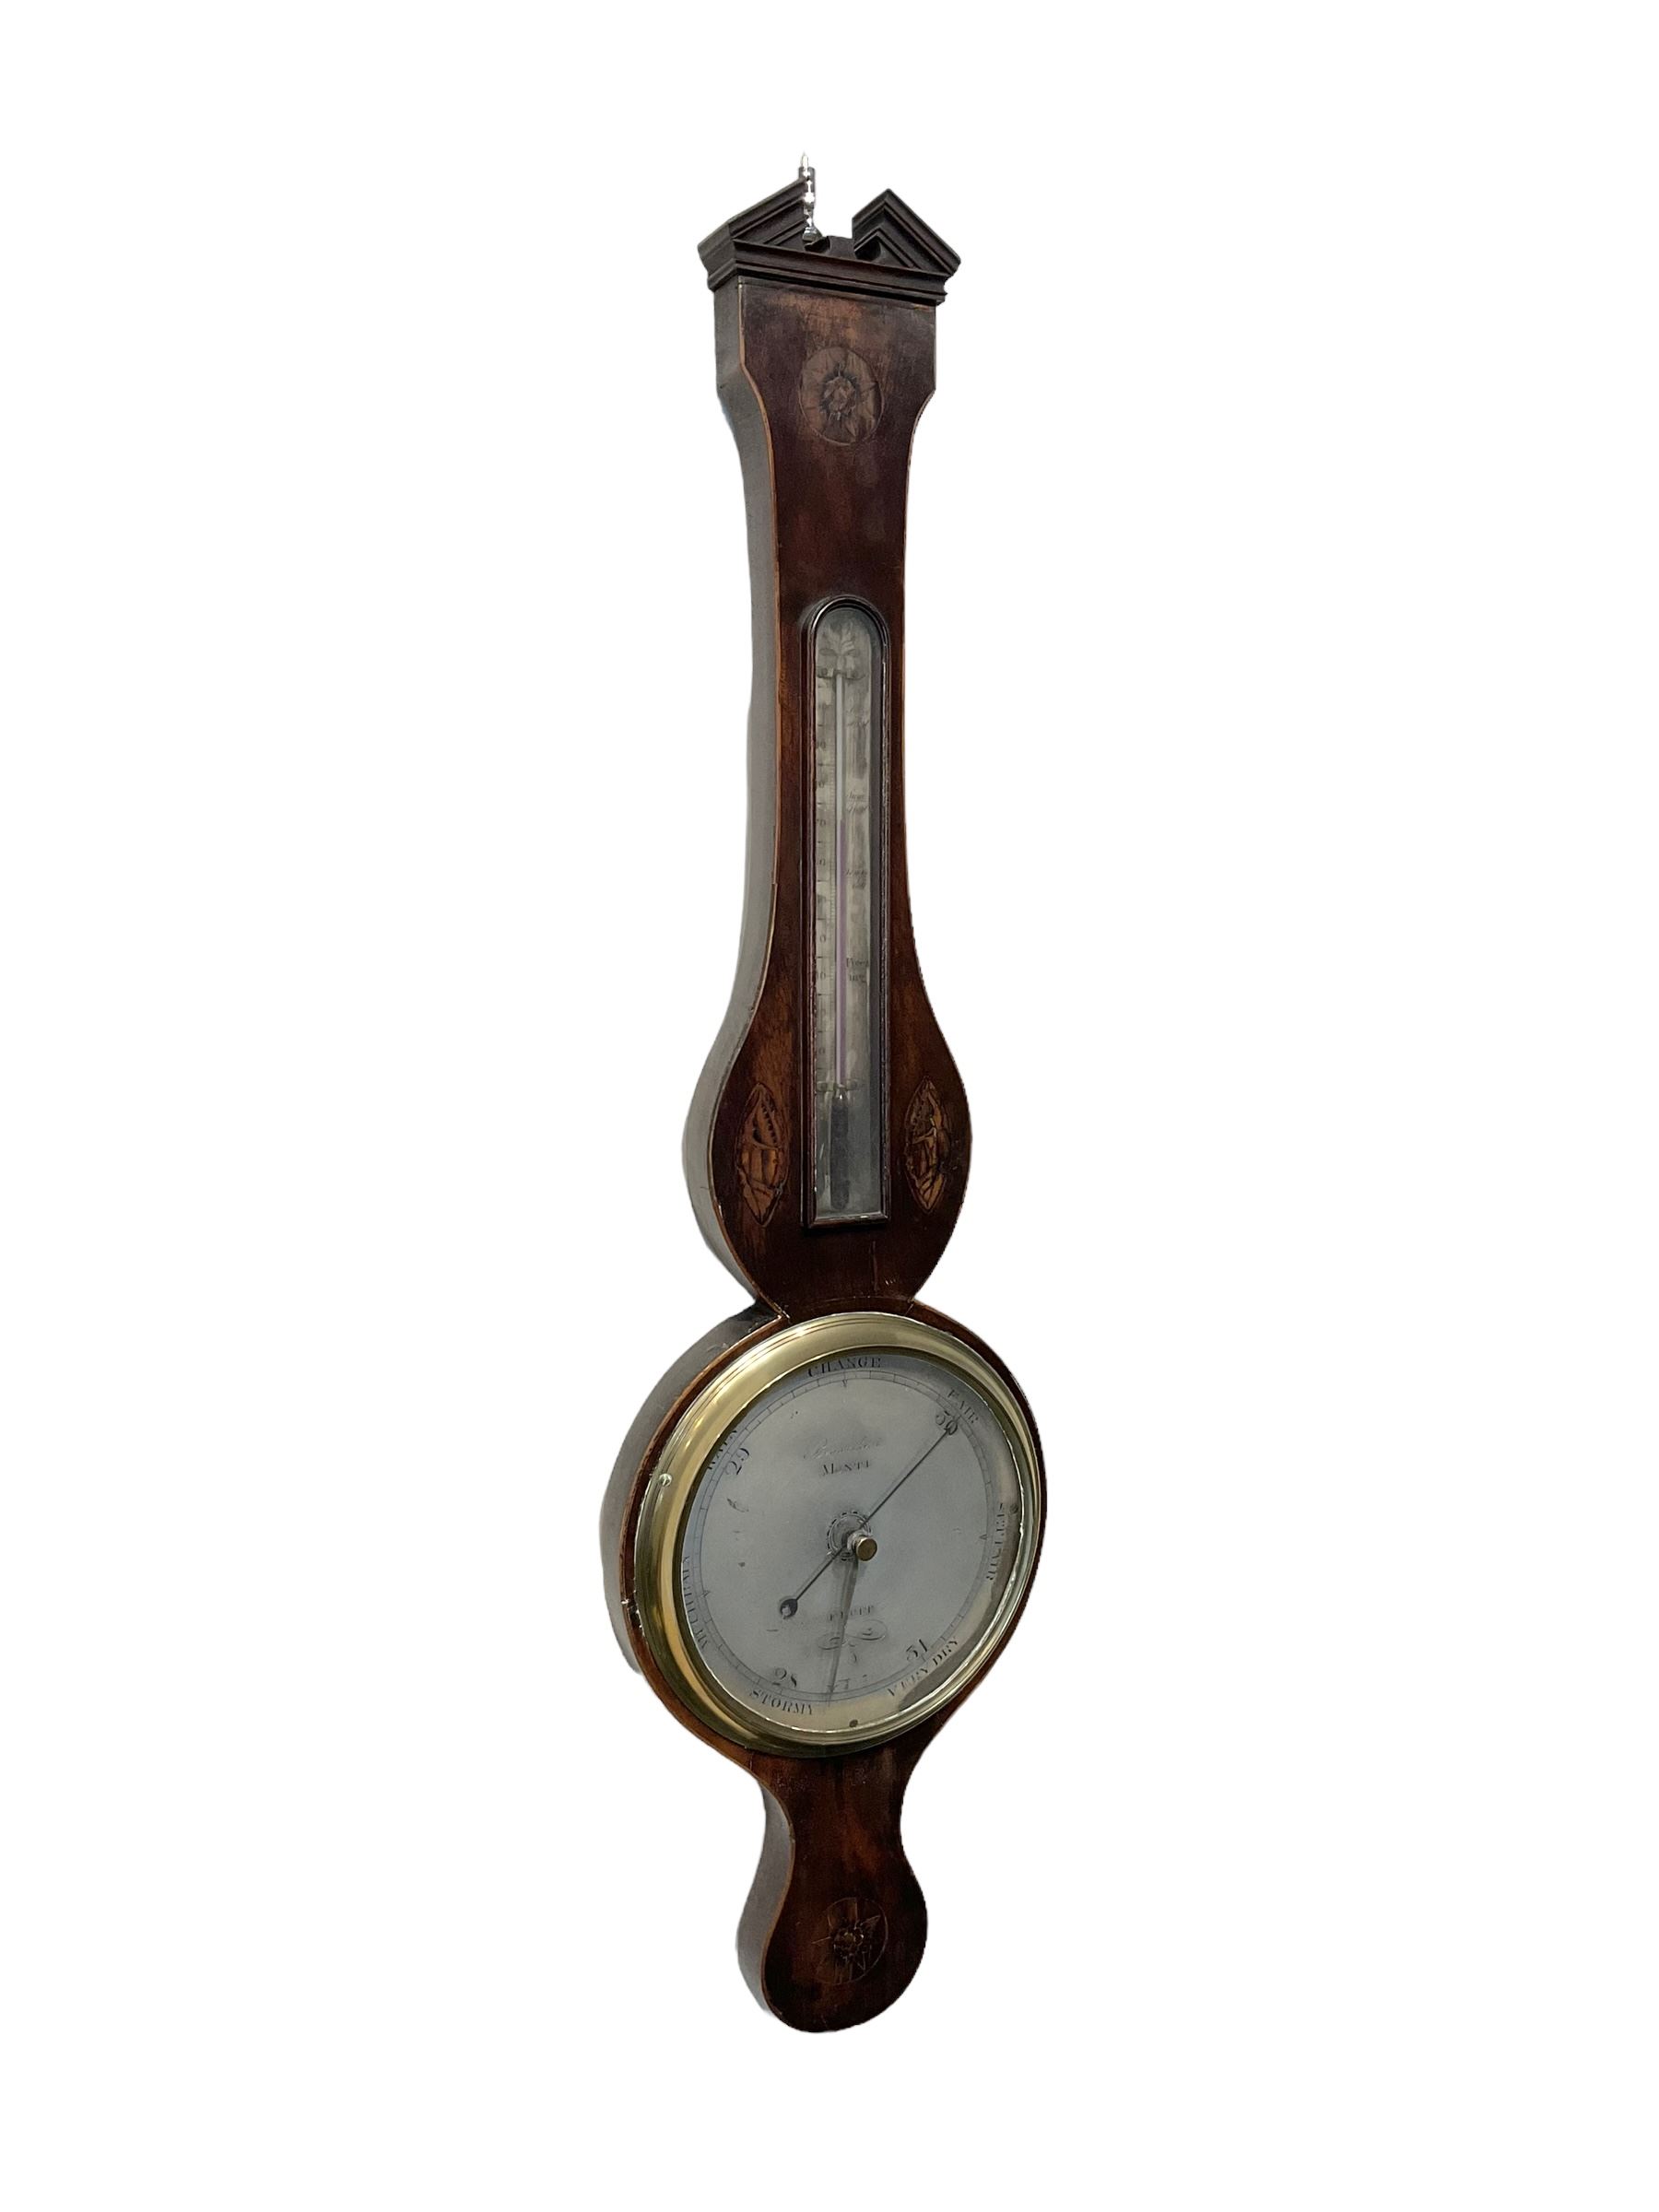 Monti - George III mercury barometer c1810 - Image 5 of 5